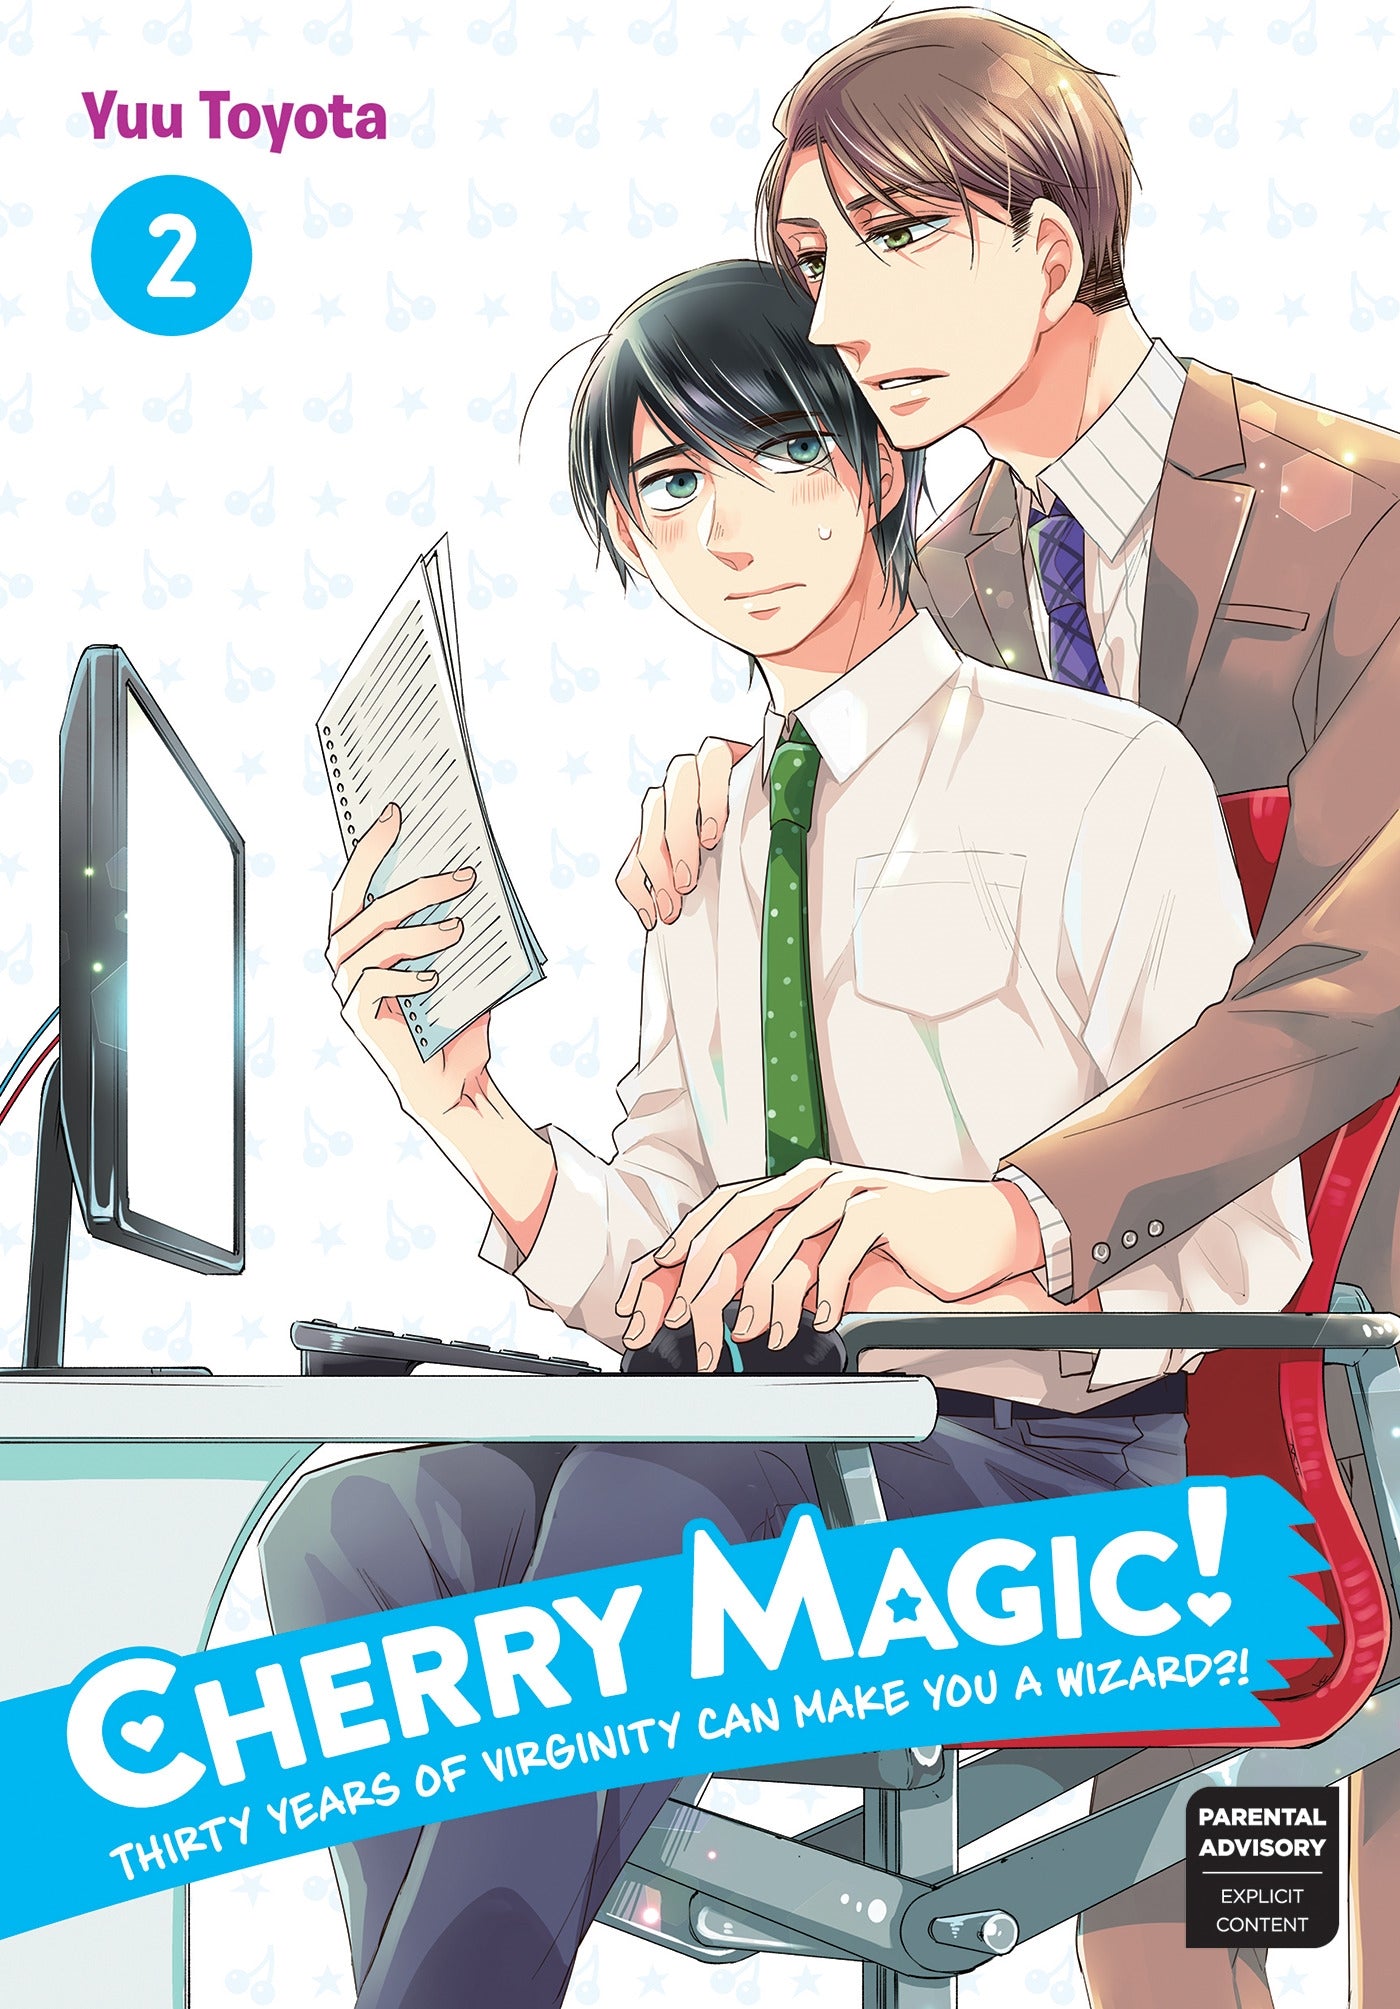 Cherry Magic! Thirty Years of Virginity Can Make You a Wizard?! 02 - Manga Warehouse